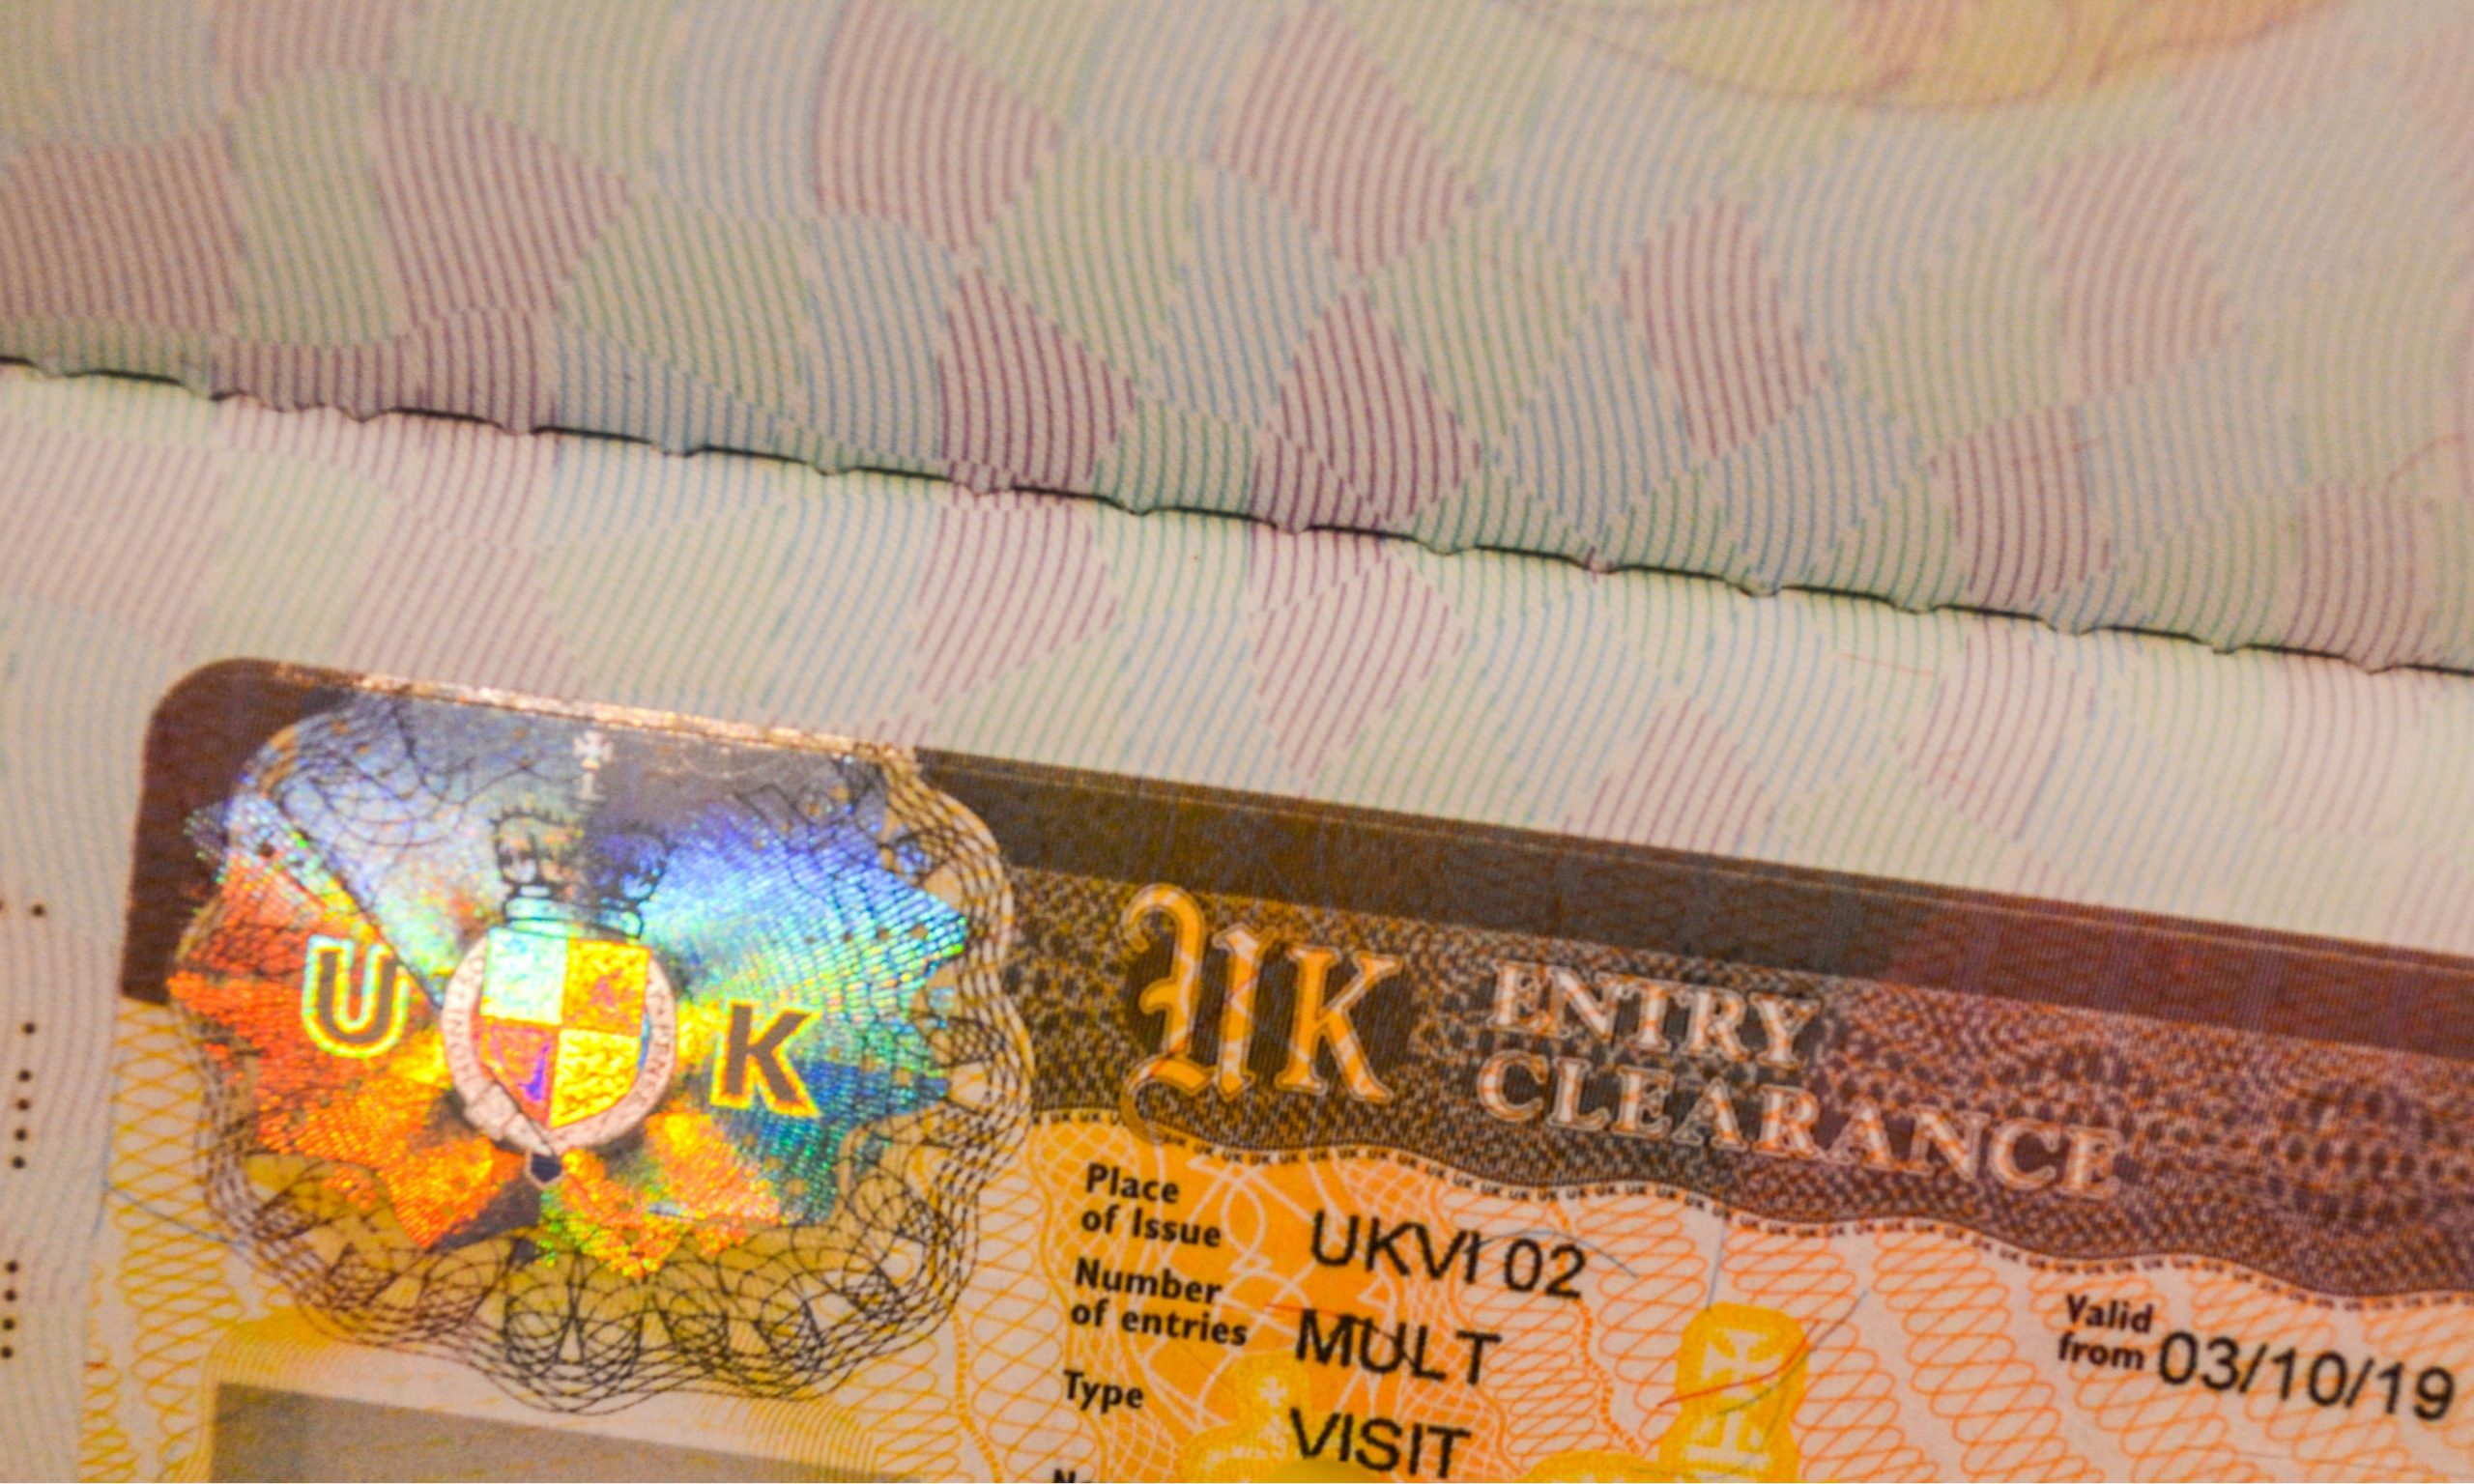 How to read UK visa sticker